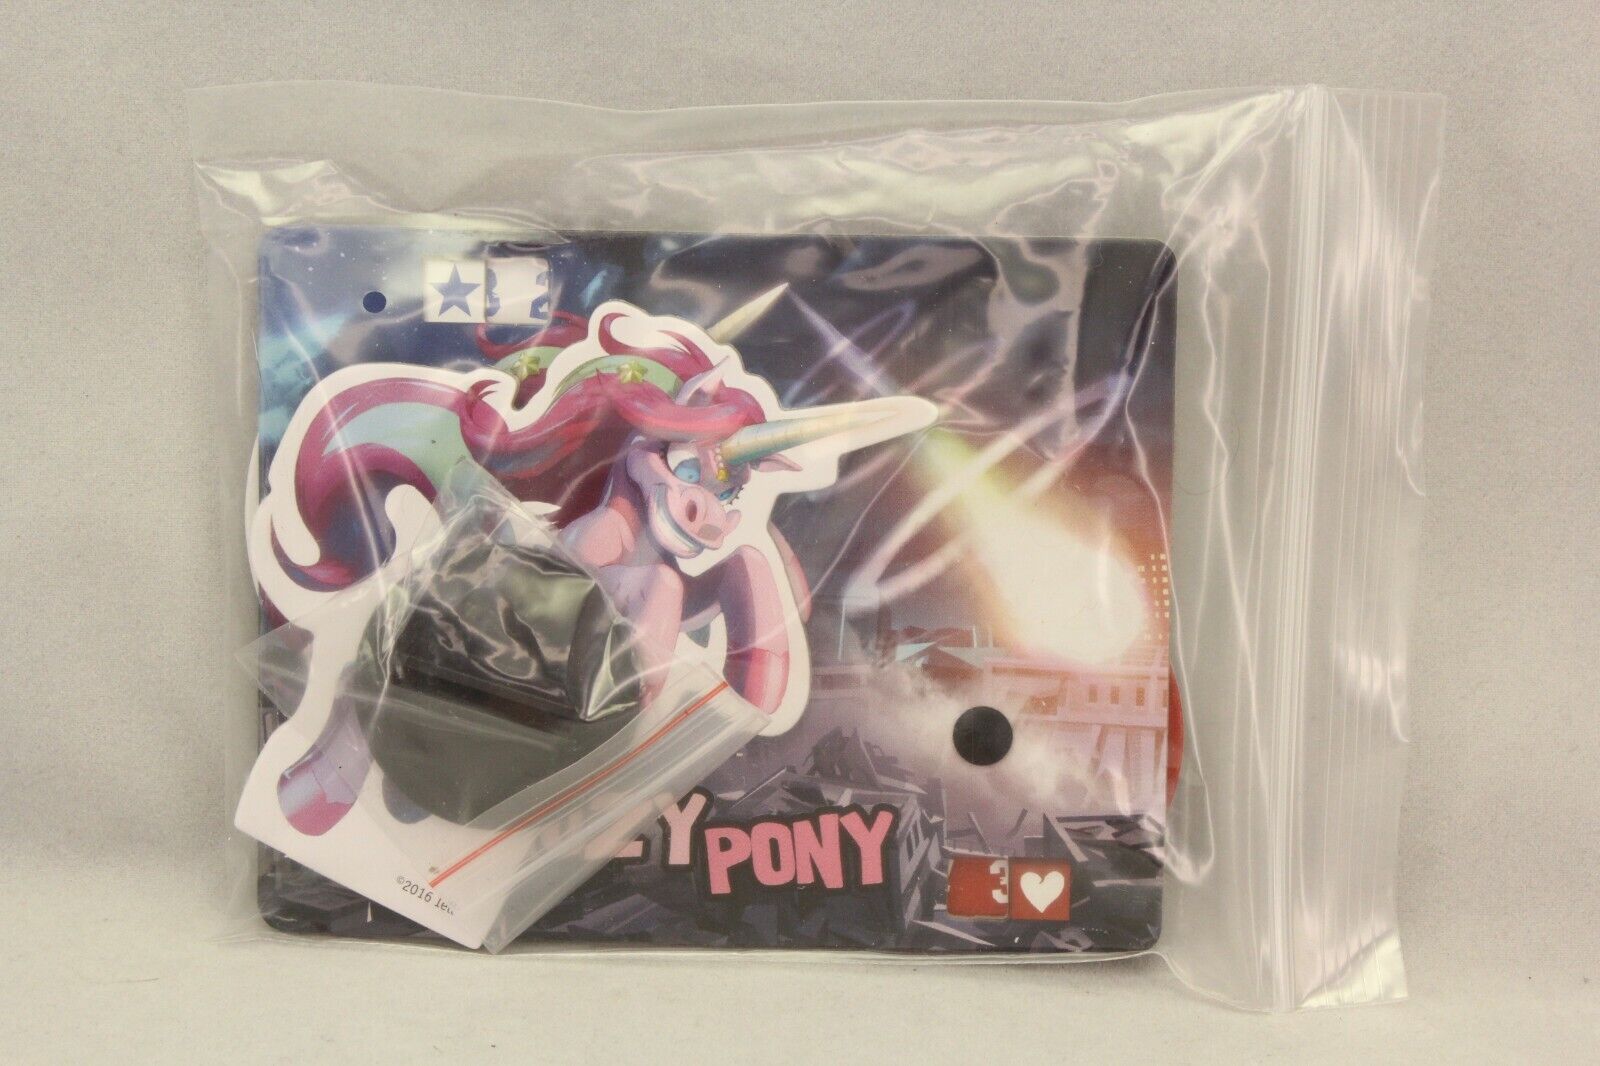 King of New York Monster Promo: Rosy Pony 